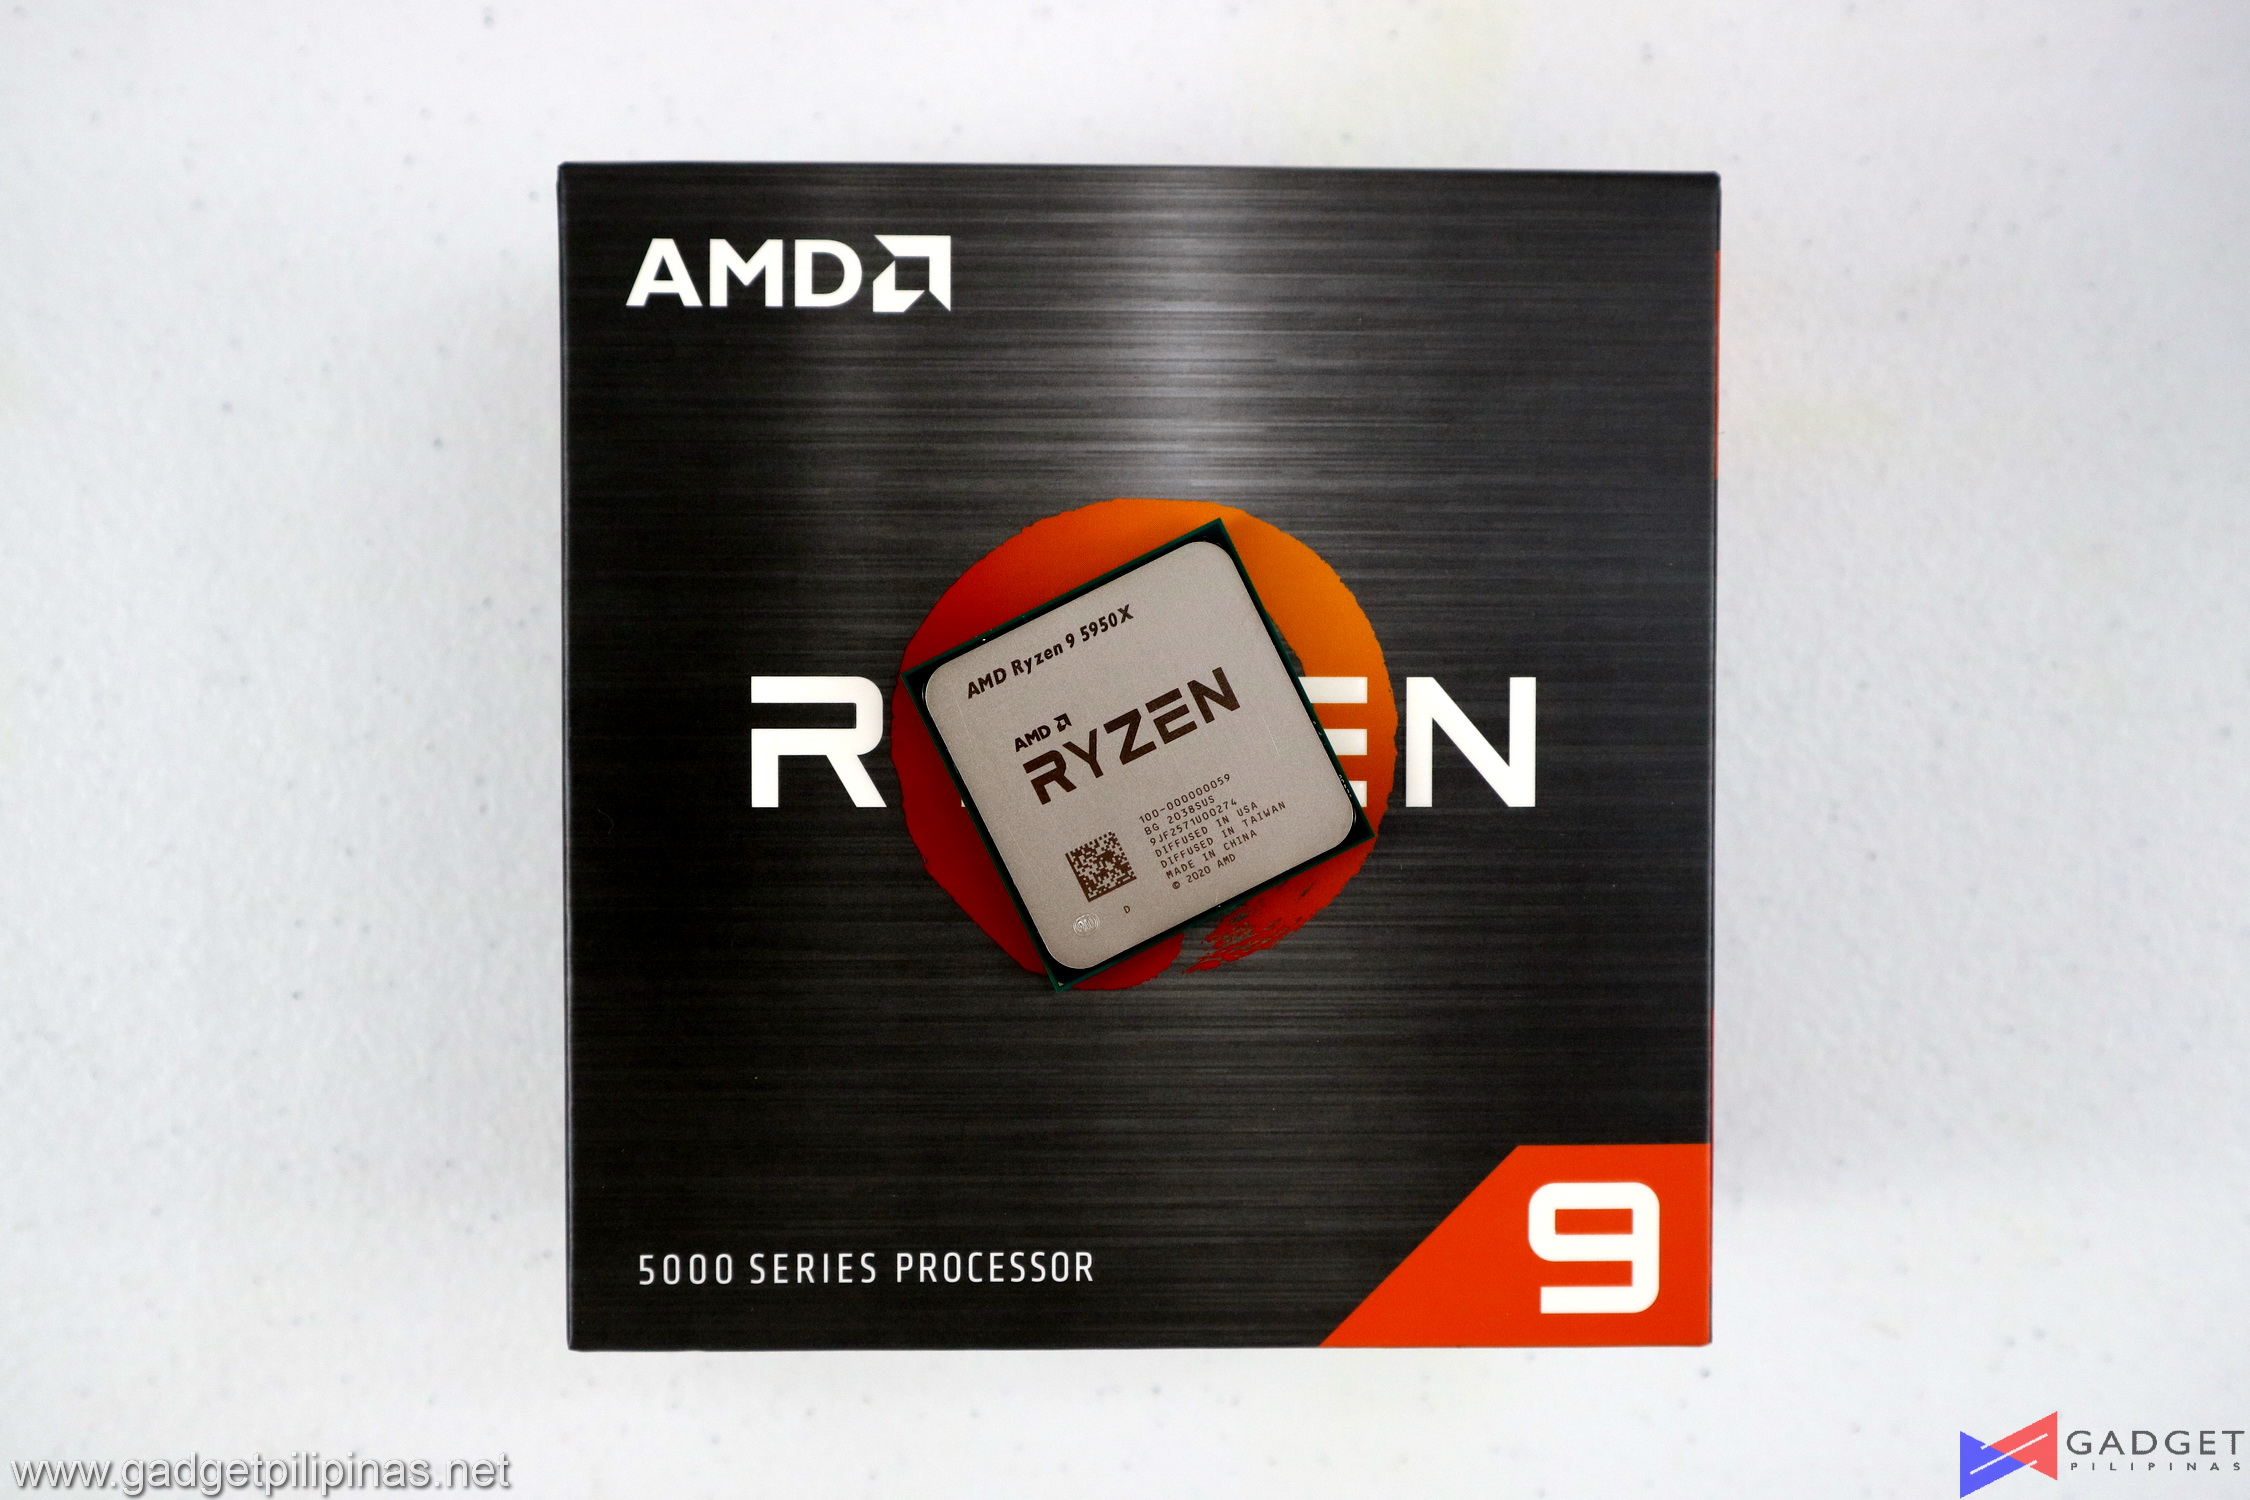 AMD Ryzen 9 5900X Processor Review – The Better Choice